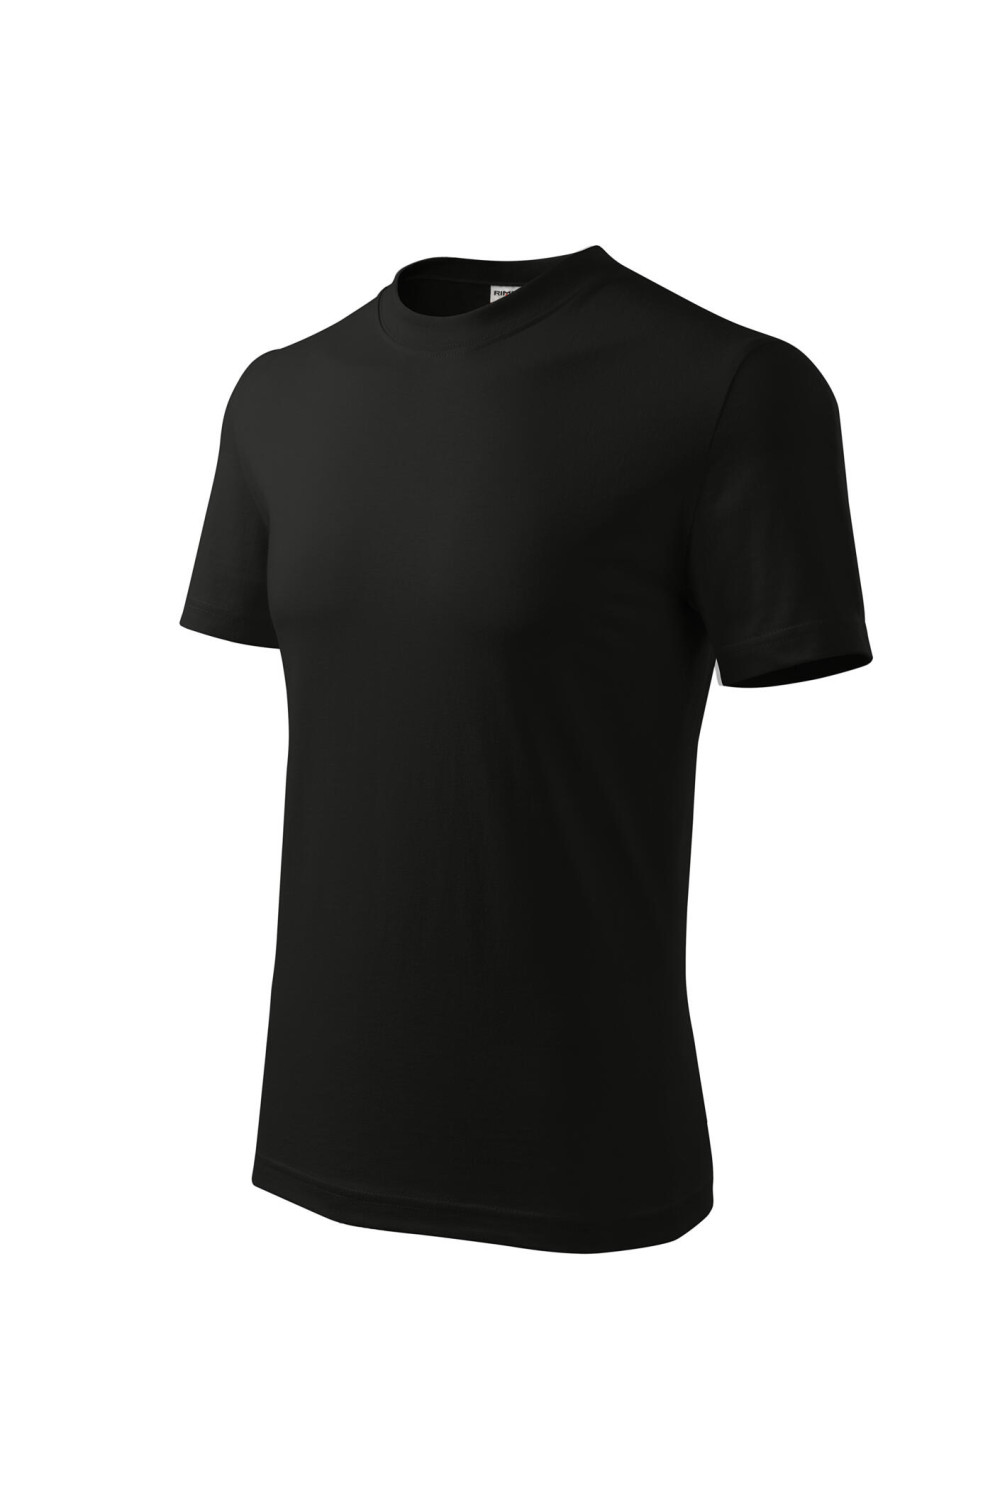 RECALL R07 MALFINI ADLER Koszulka t-shirt unisex czarny